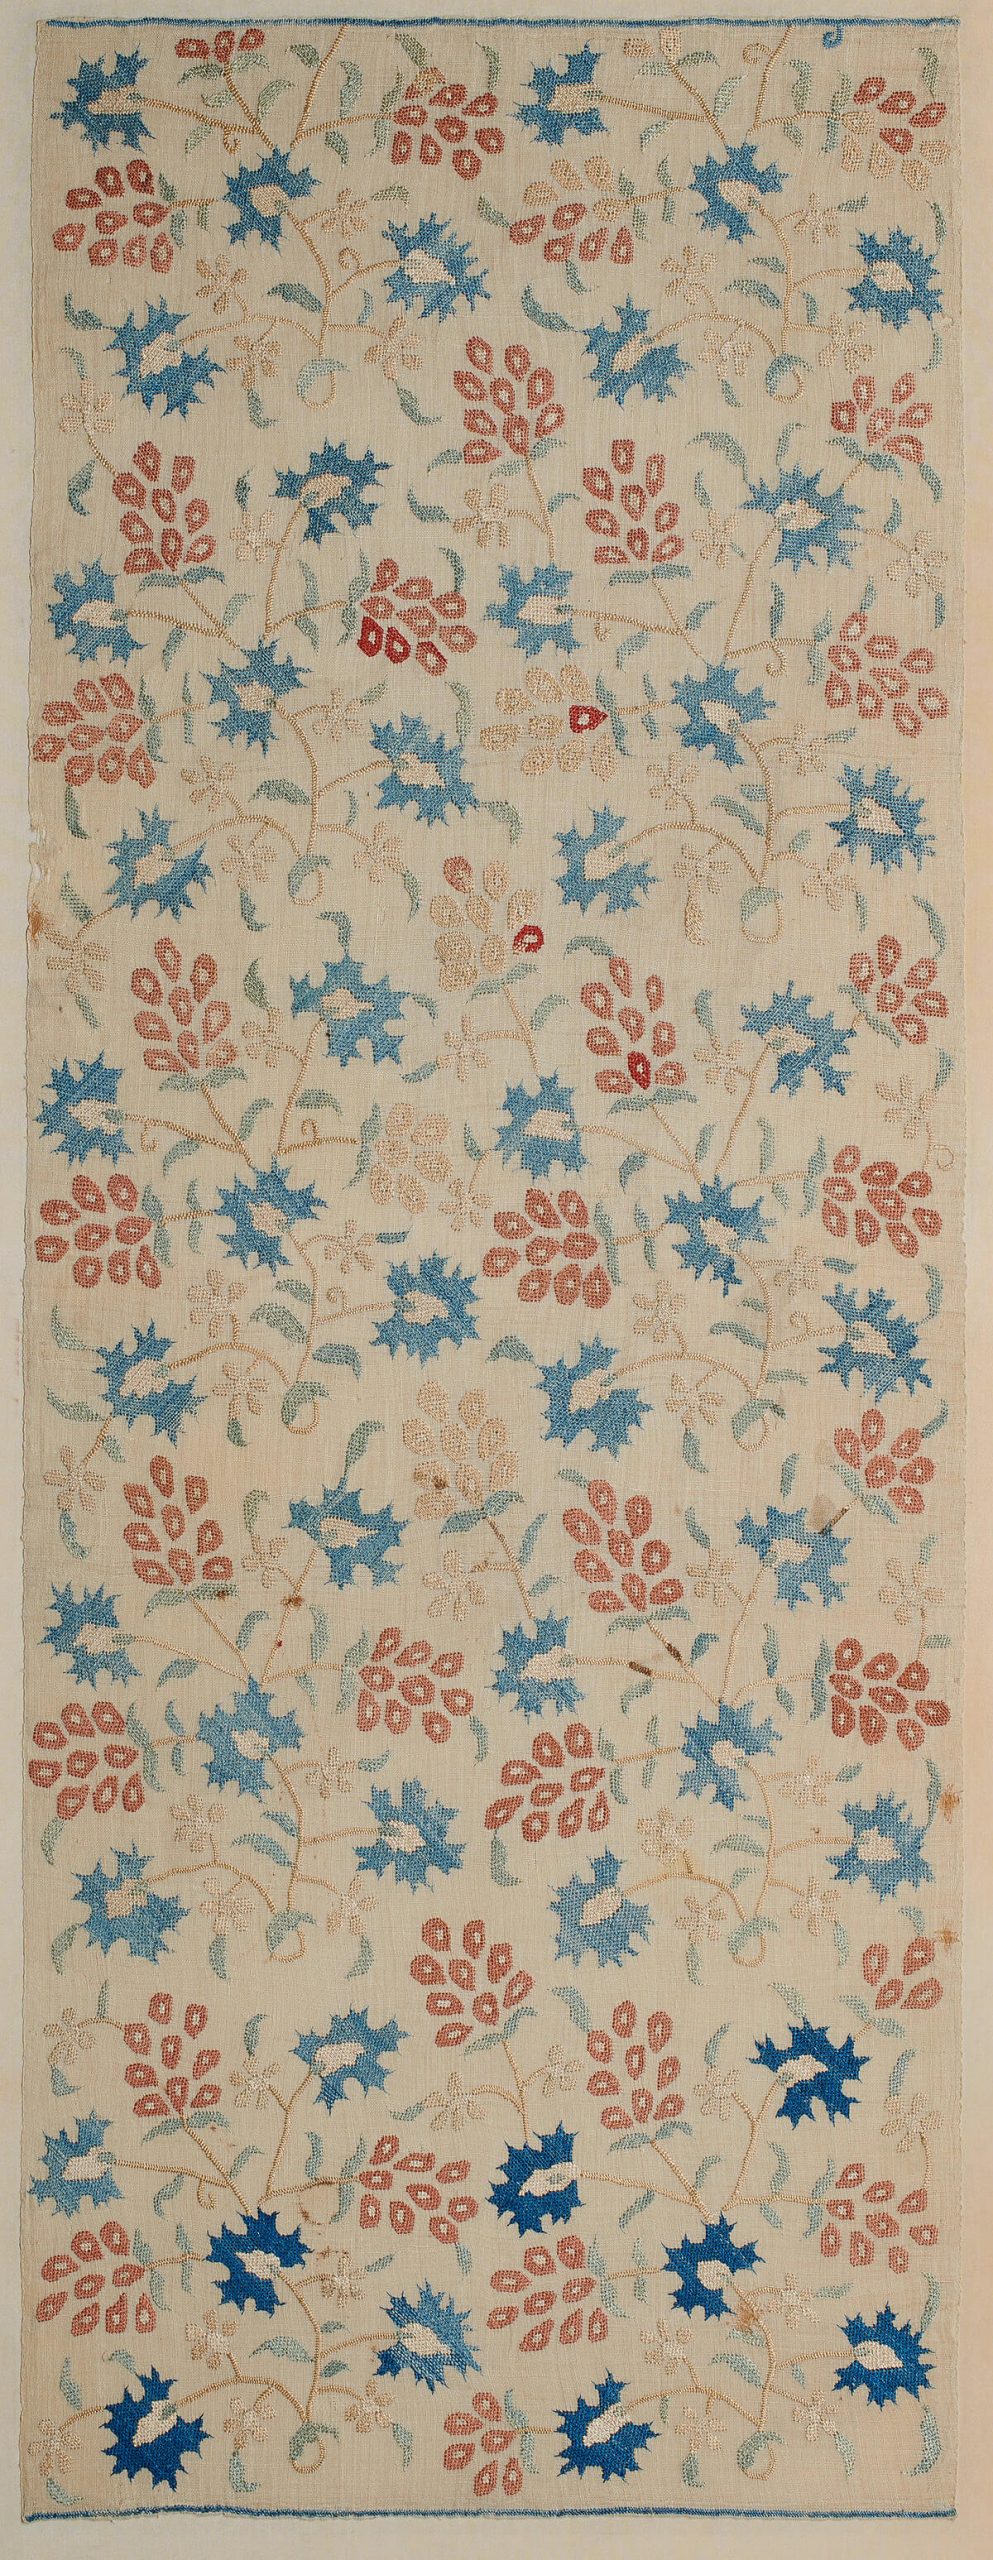 Panneau textile ottoman